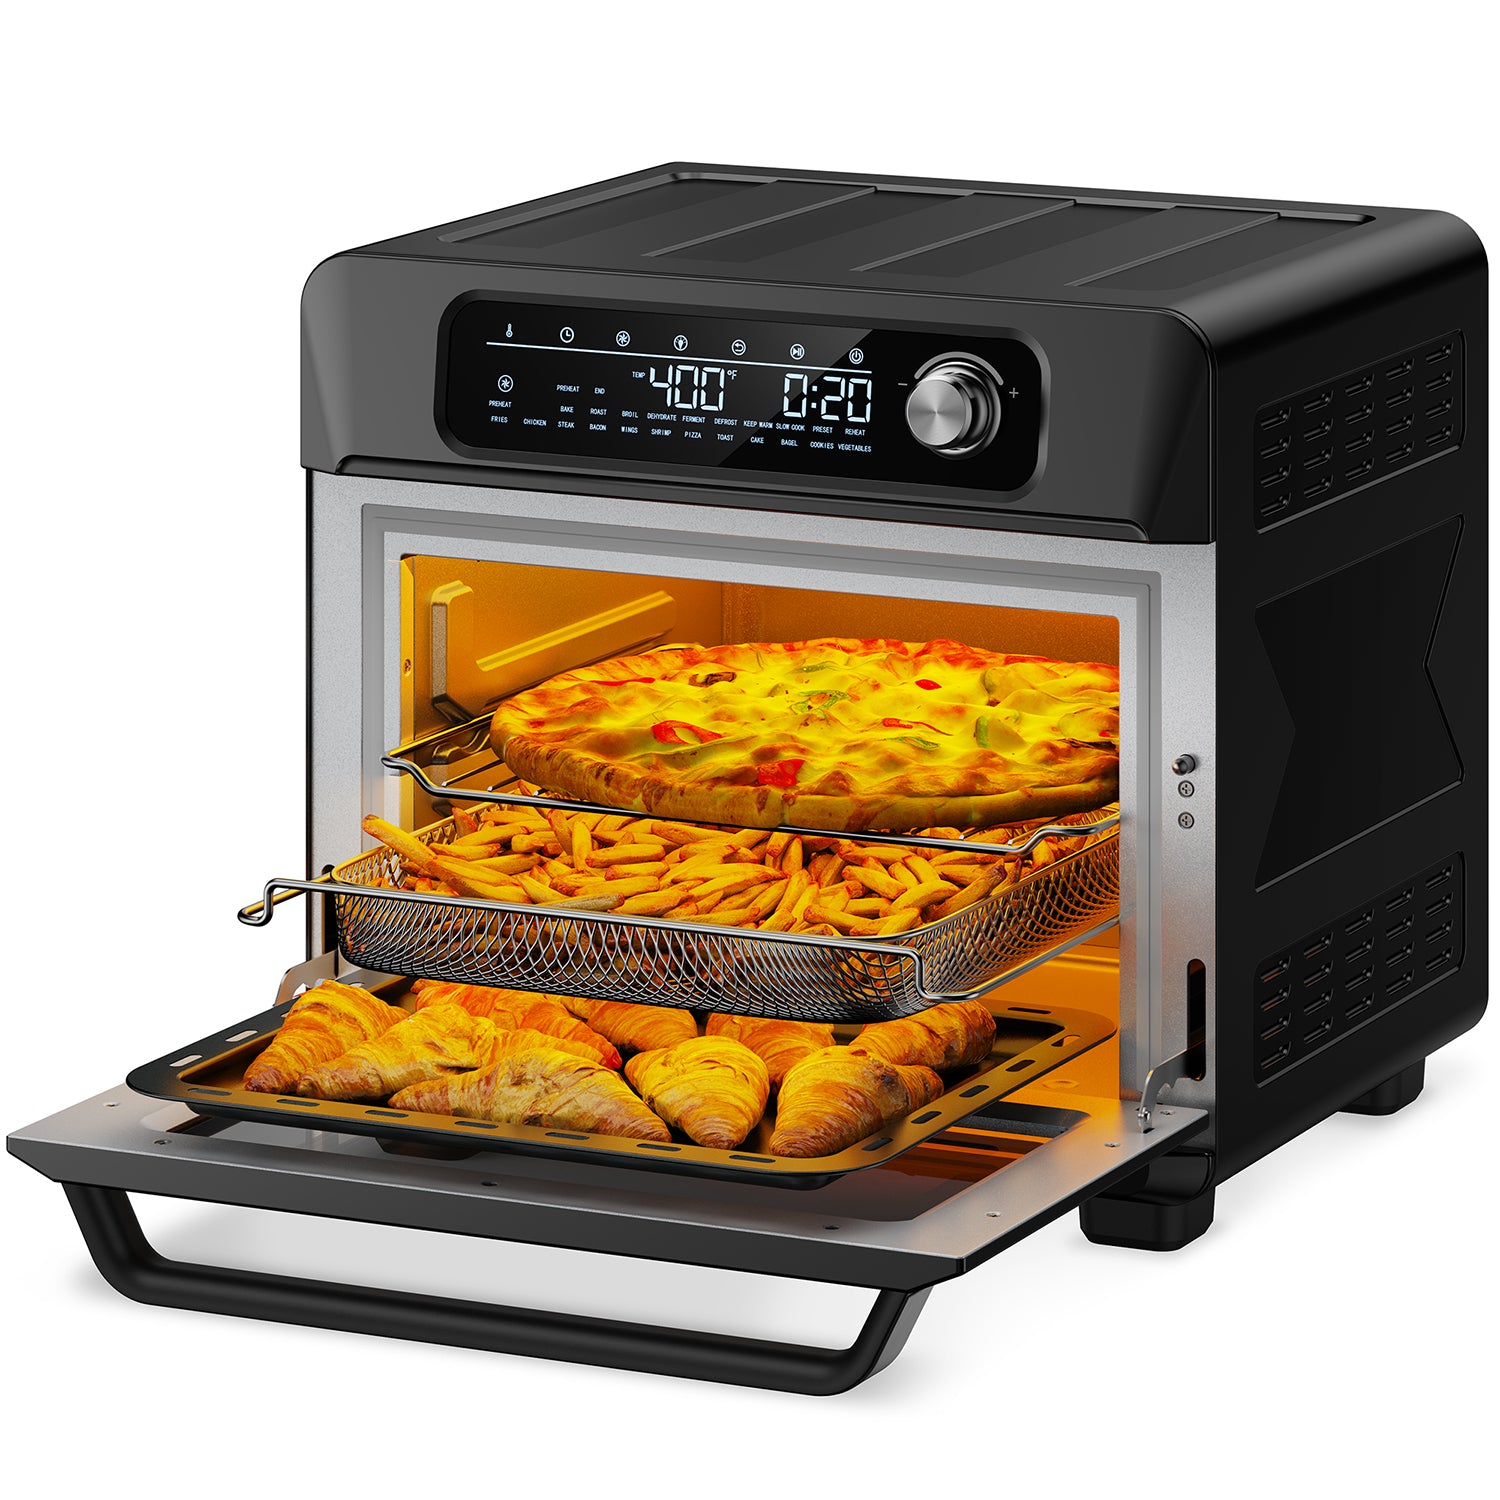 Paris Rhône Digital Air fryer Oven AF006, Combo 26QT for 12" Pizza